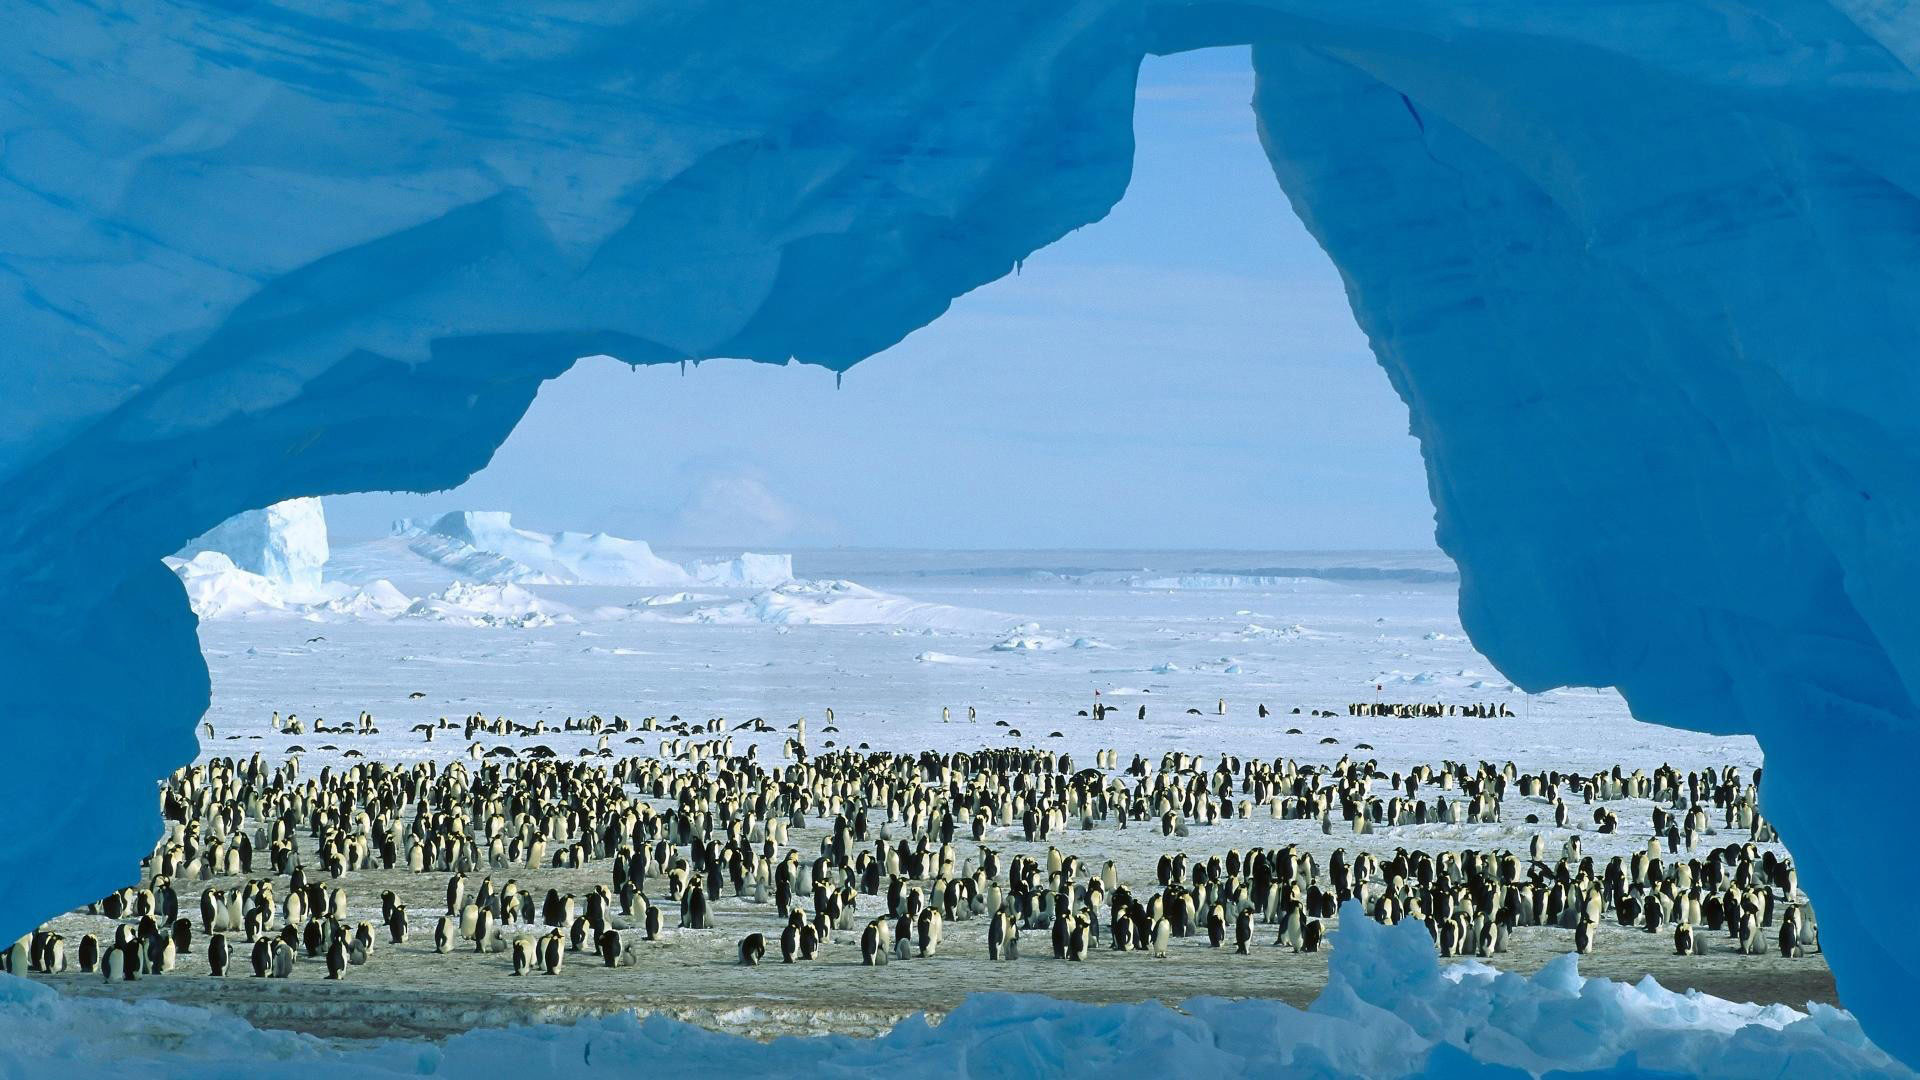 hd pics photos travel antarctica best world tour desktop background  wallpaper